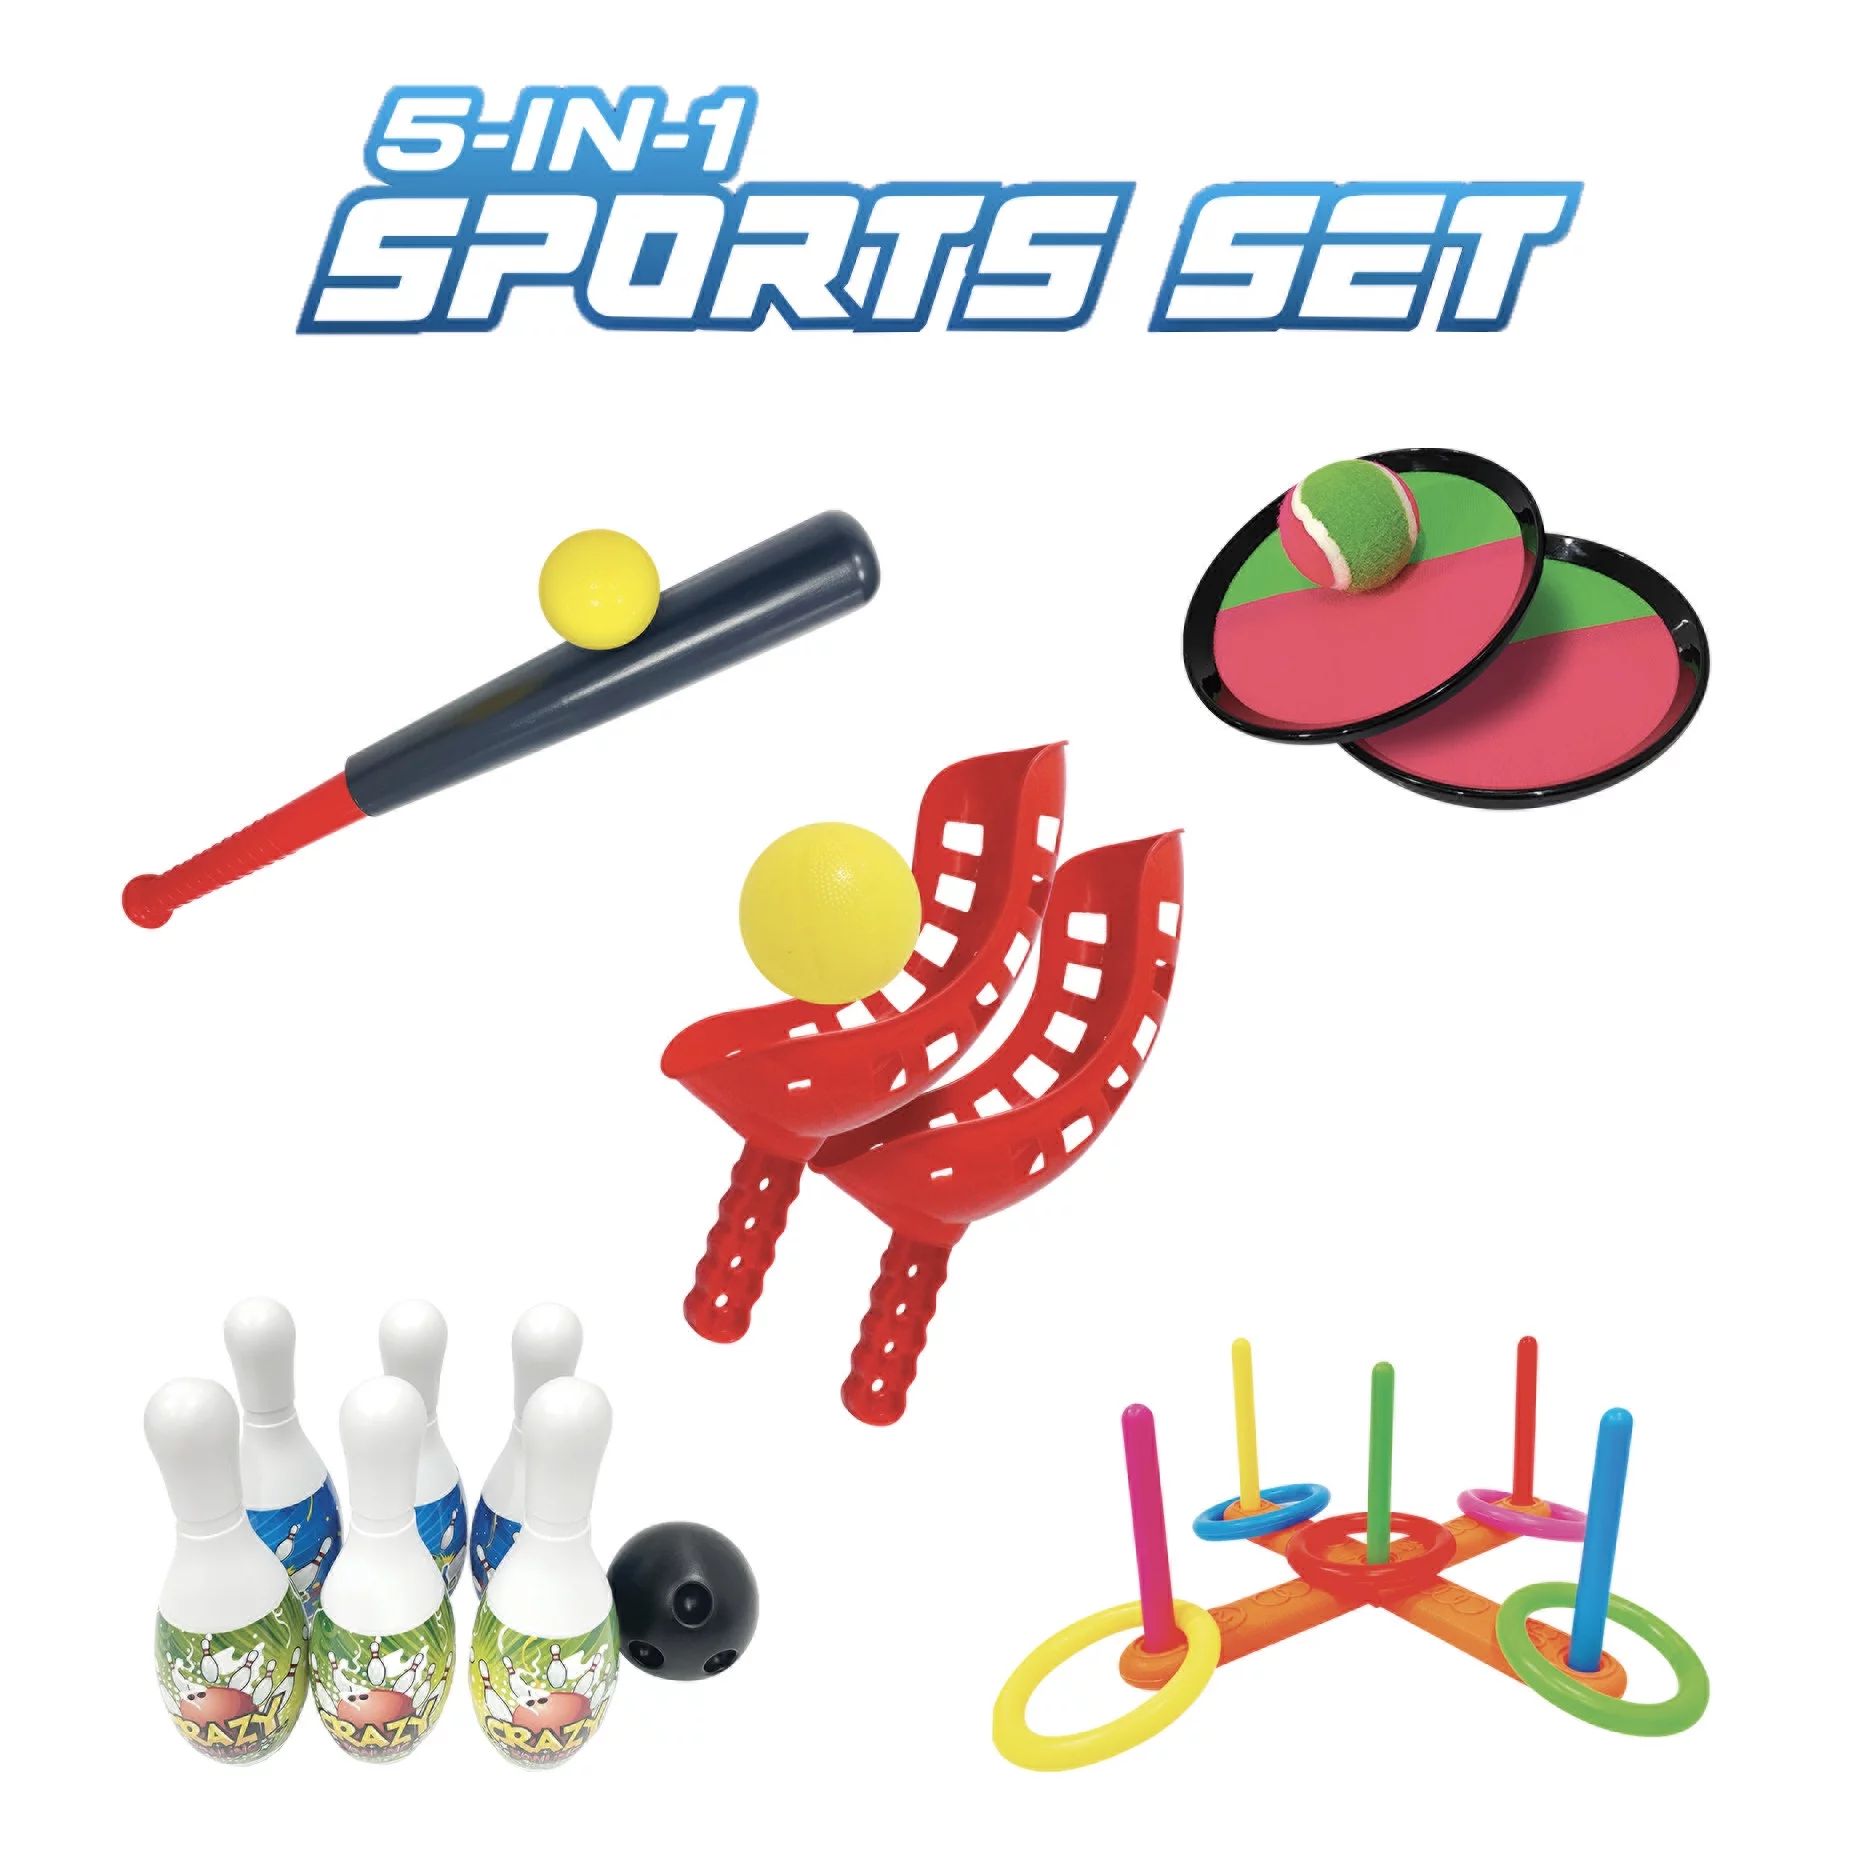 MinnARK 5-in-1 Sports Set, Family Games, Outdoor Yard Games, Beach Games, Jr. Sports | Walmart (US)